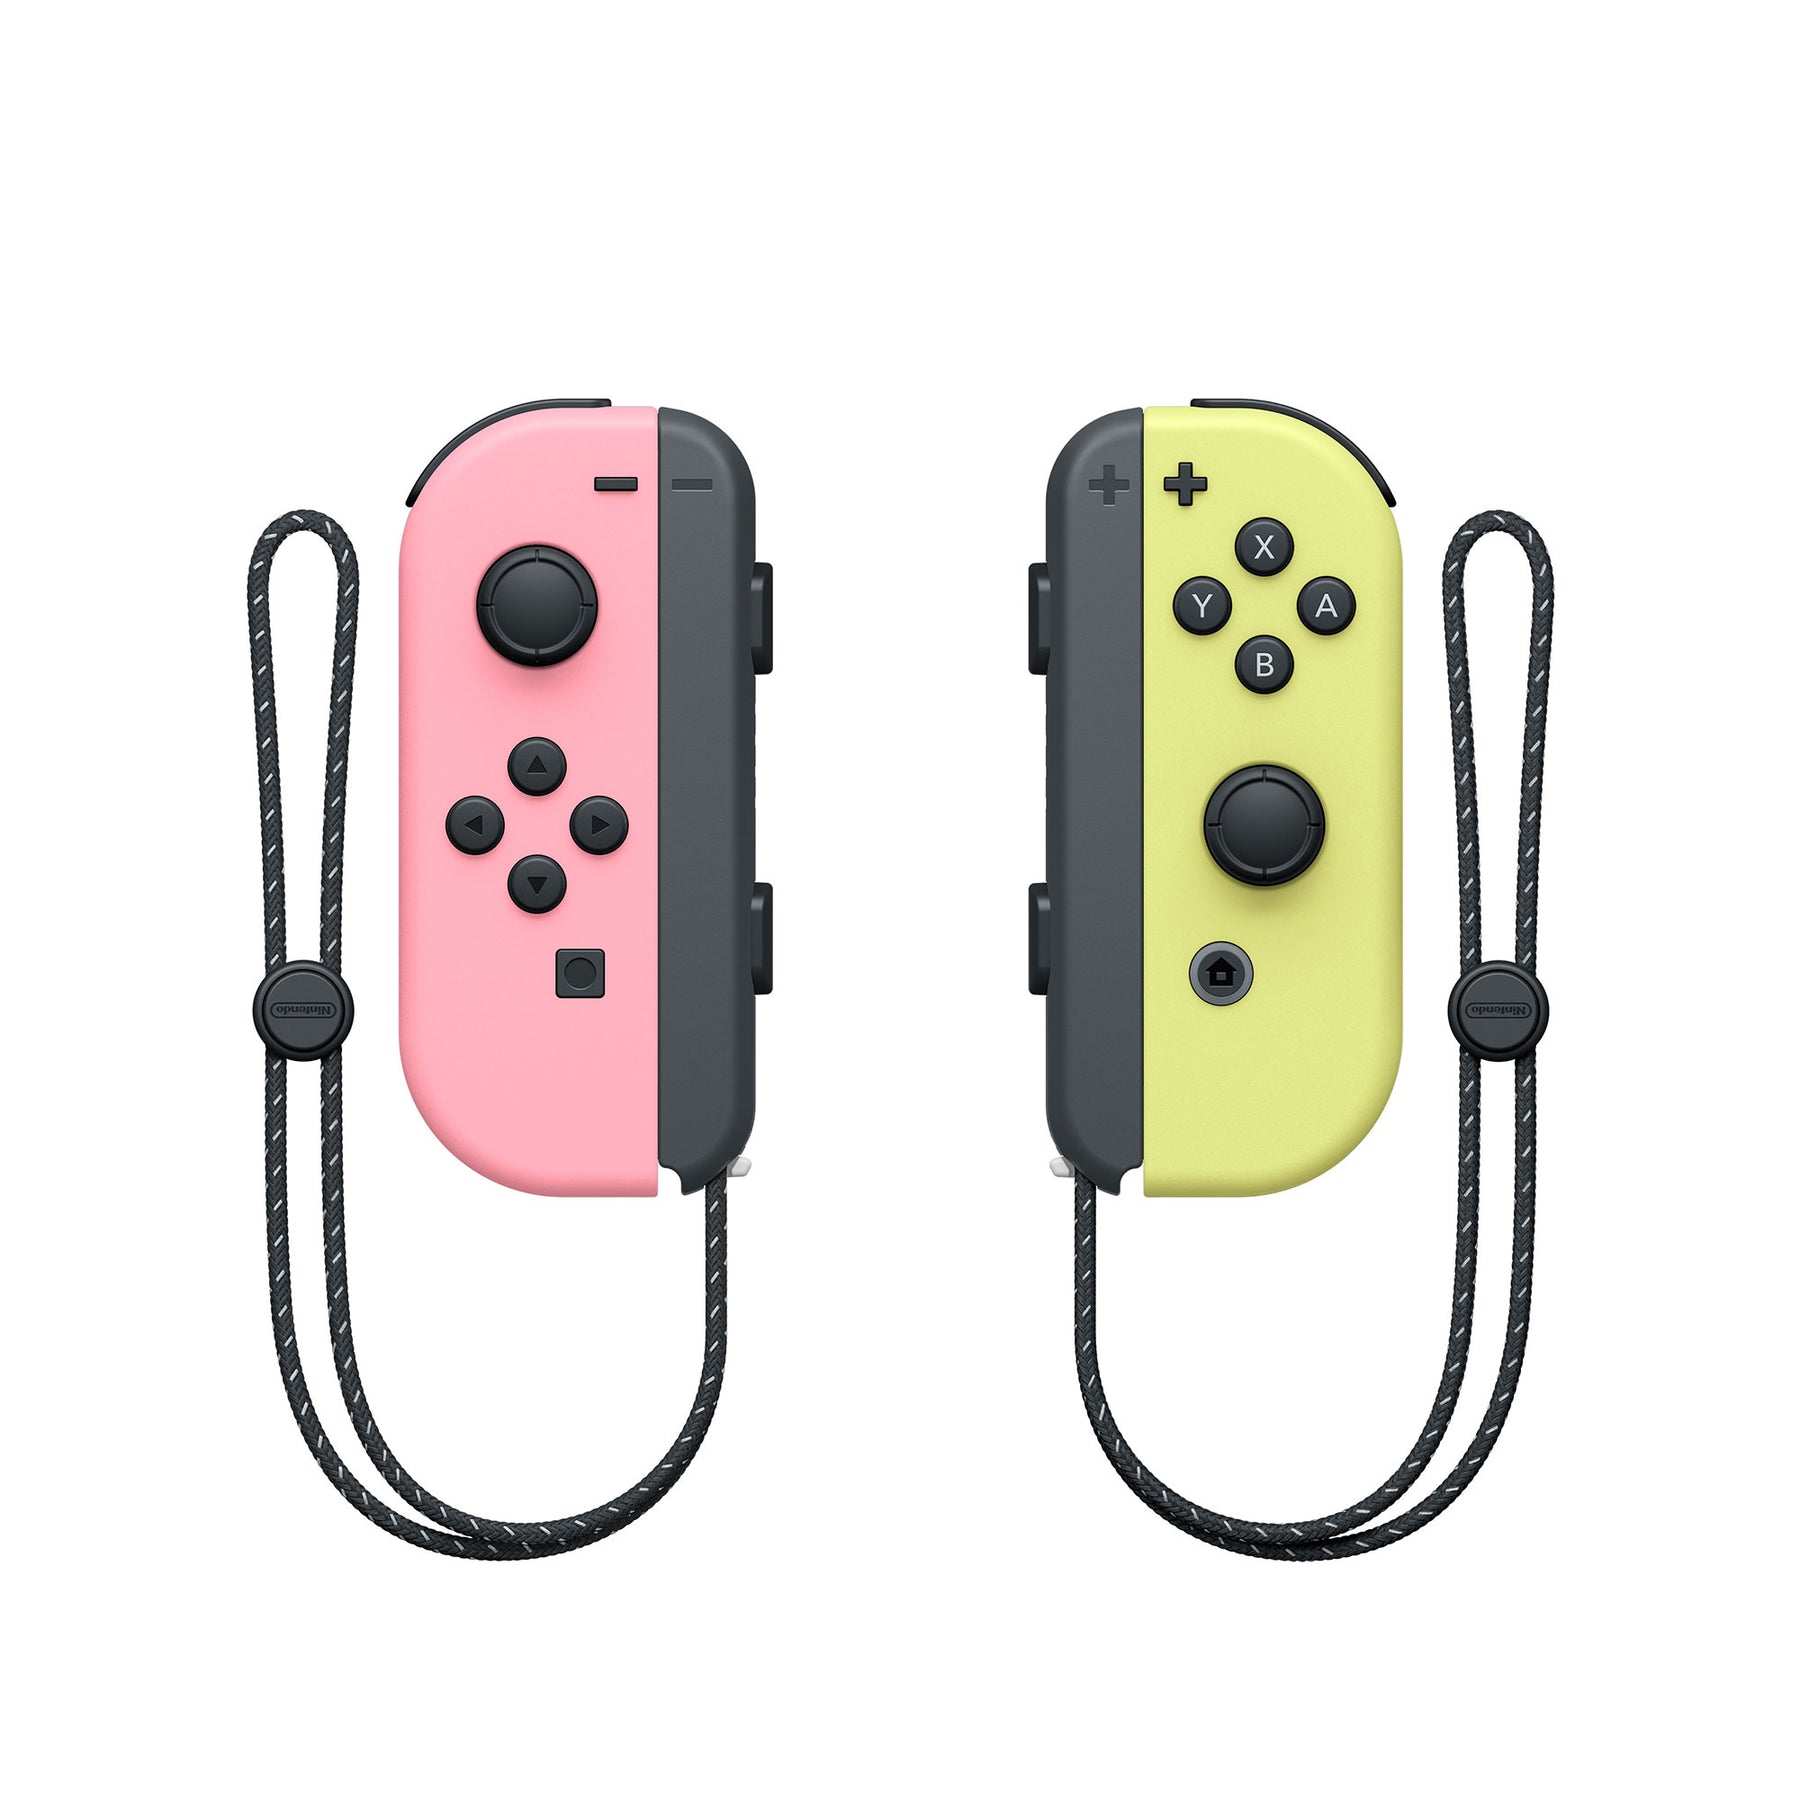 Nintendo Switch Joy-Con Controller (L+R)